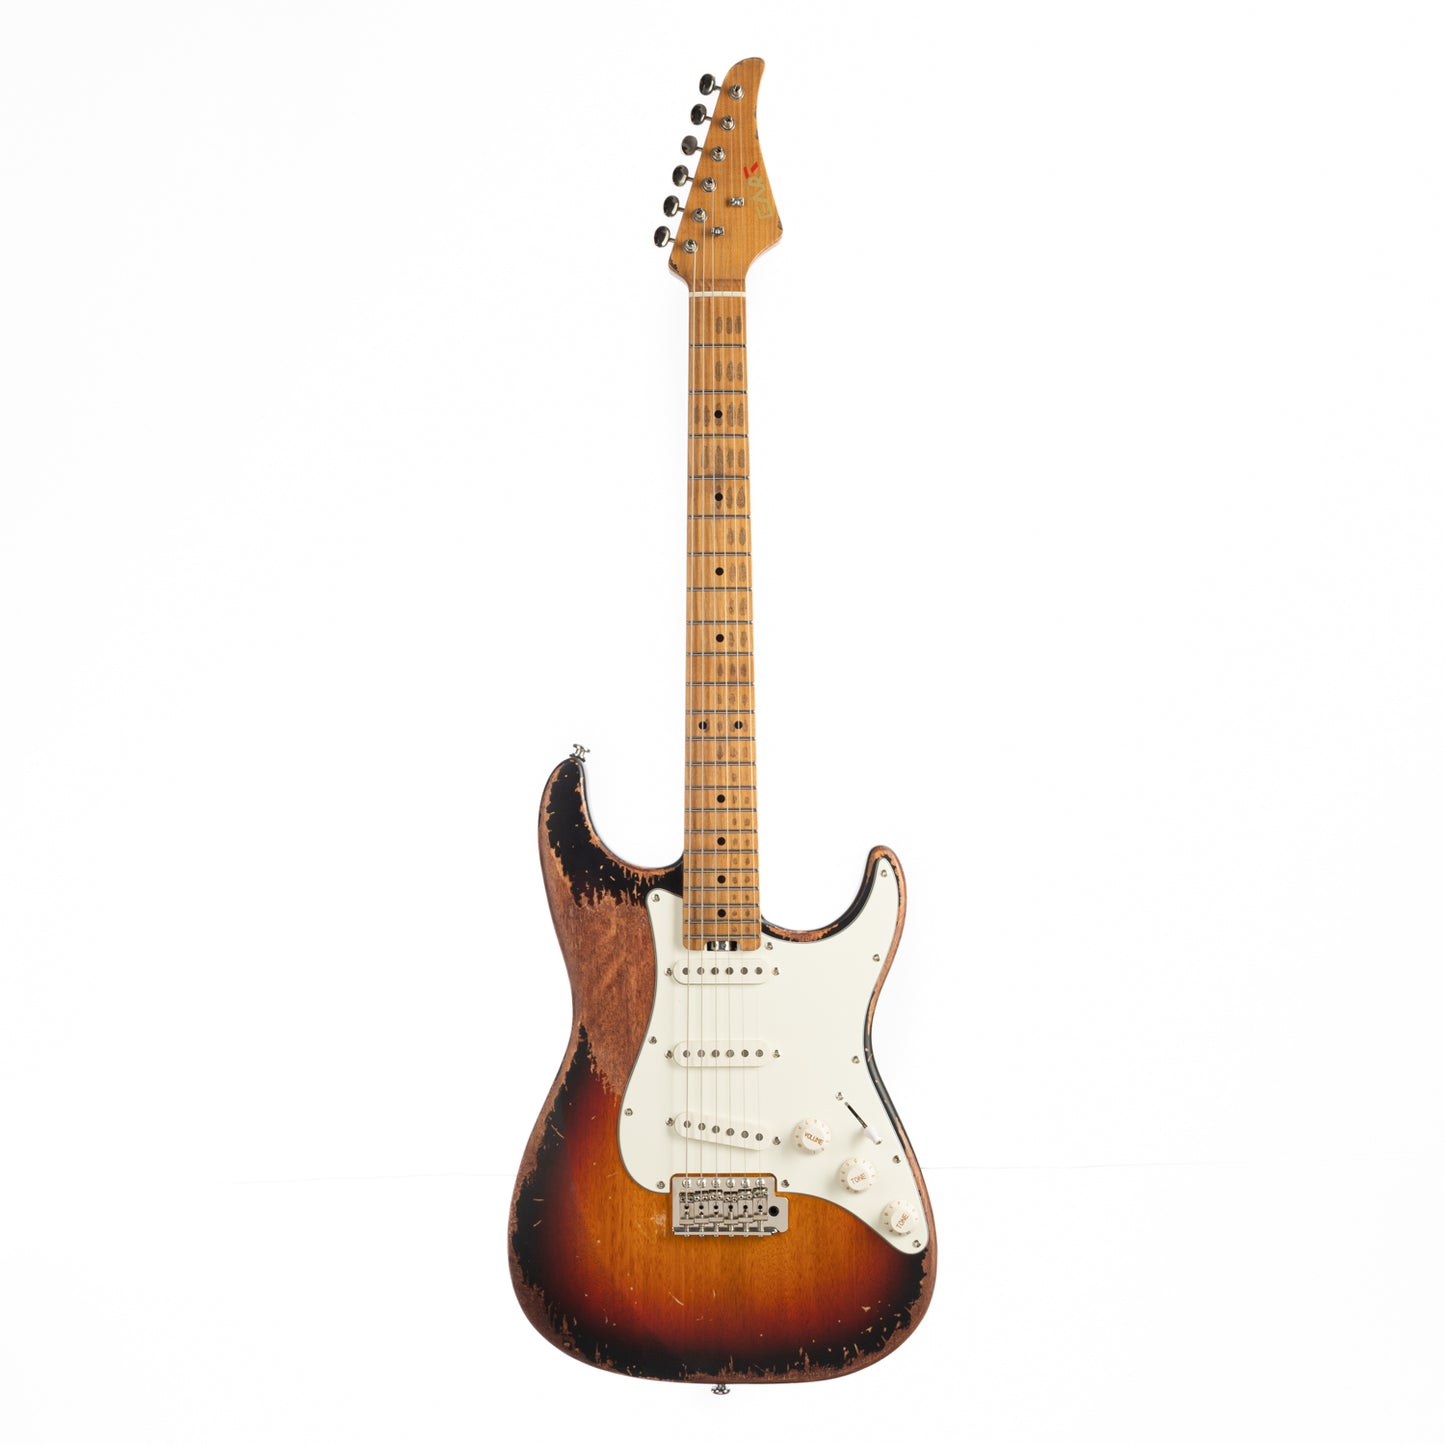 EART Guitars Vintage-VS60H maple fretboard sunburst